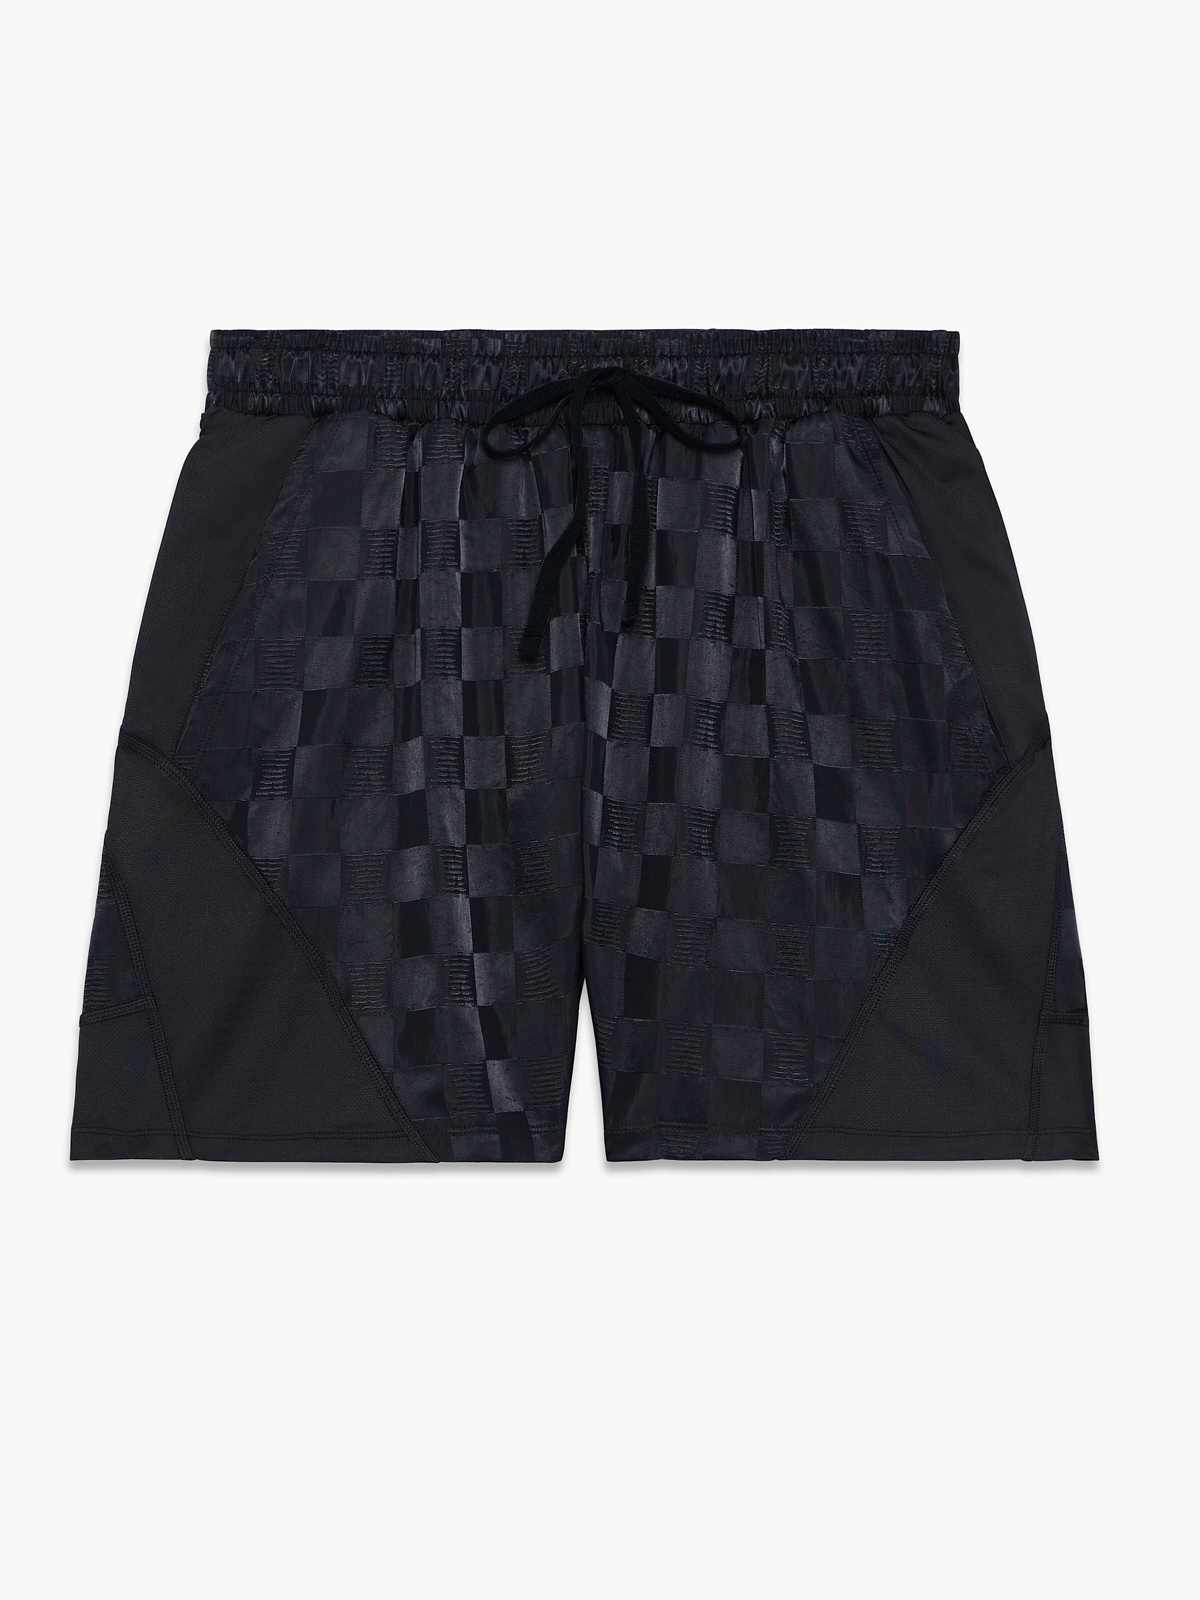 Louis Vuitton Damier Jacquard Shorts